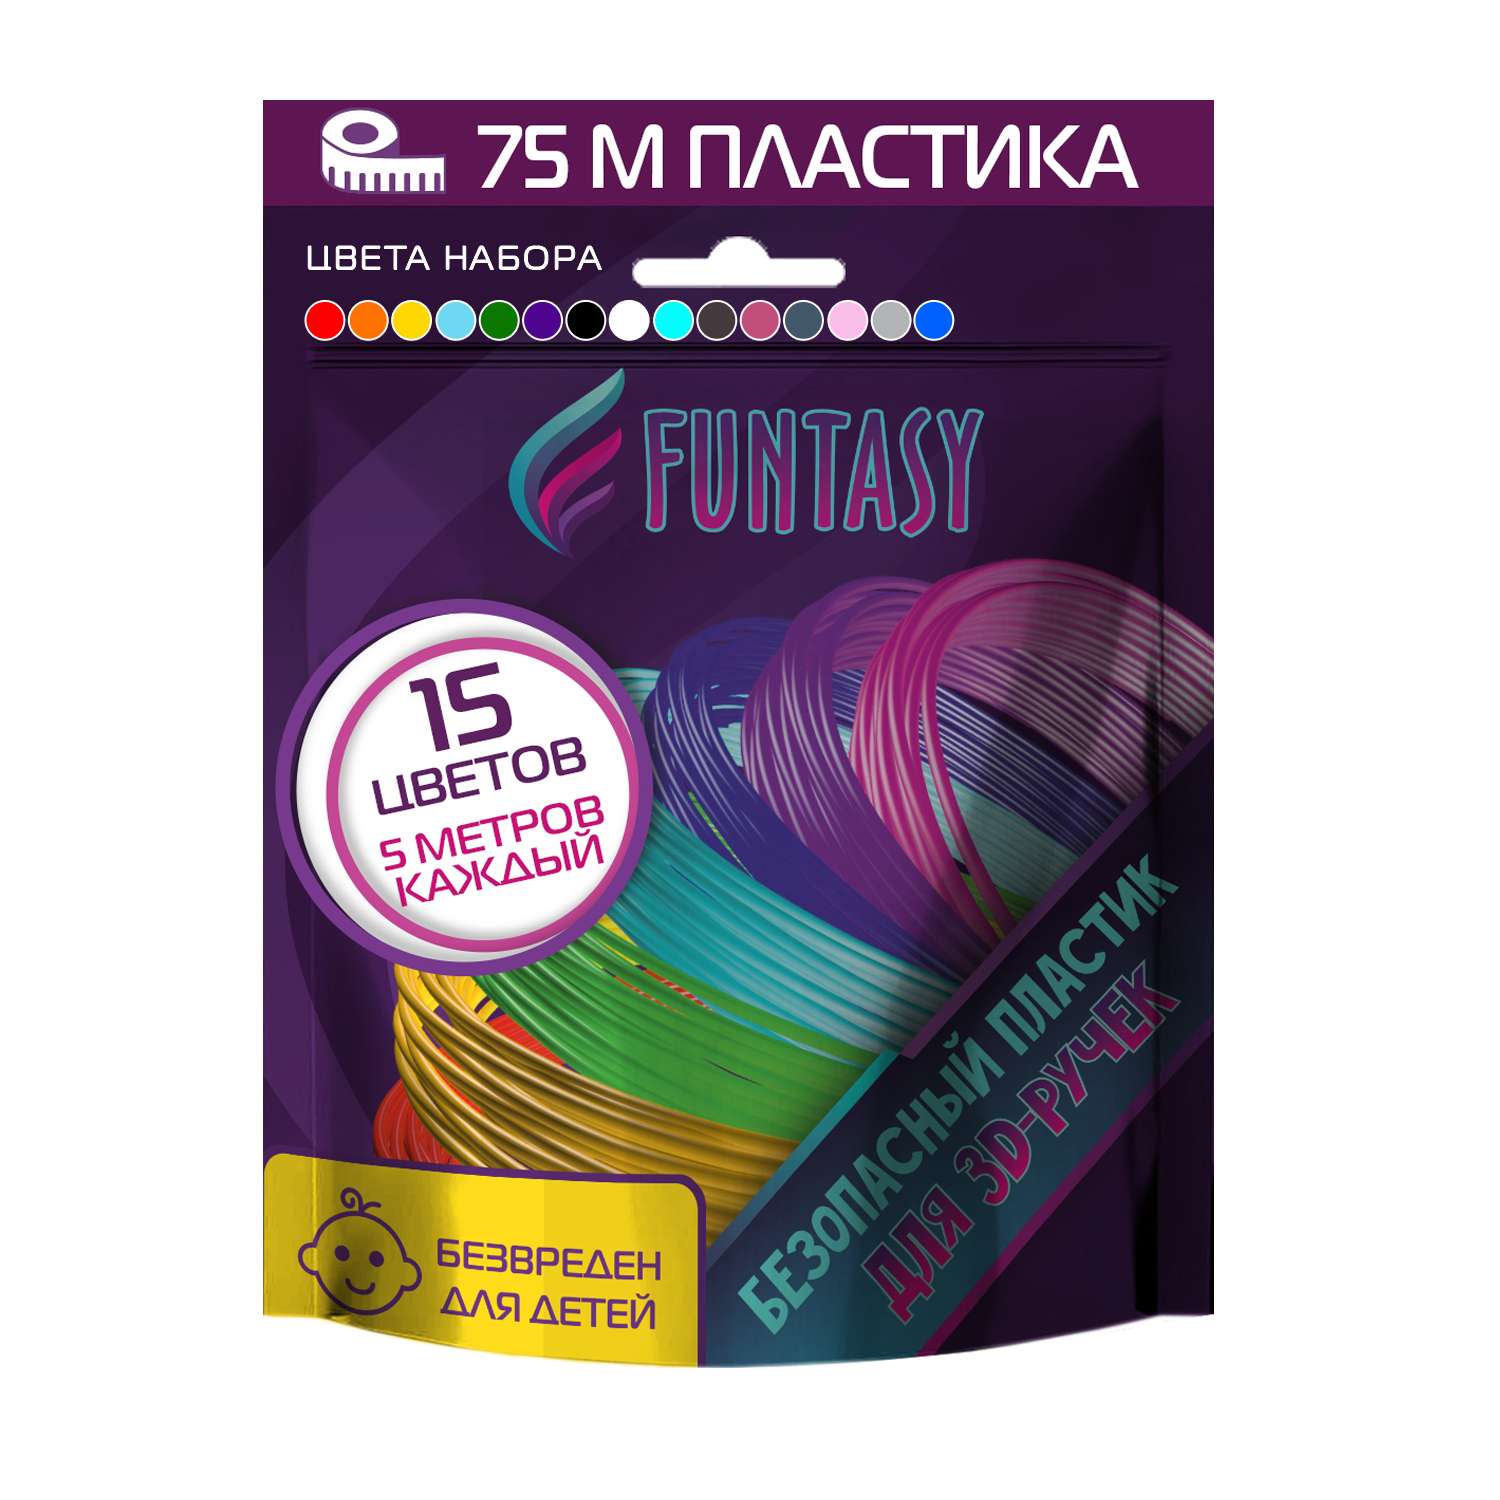 Пластик PLA для 3d ручки Funtasy 15 цветов по 5 метров - фото 1